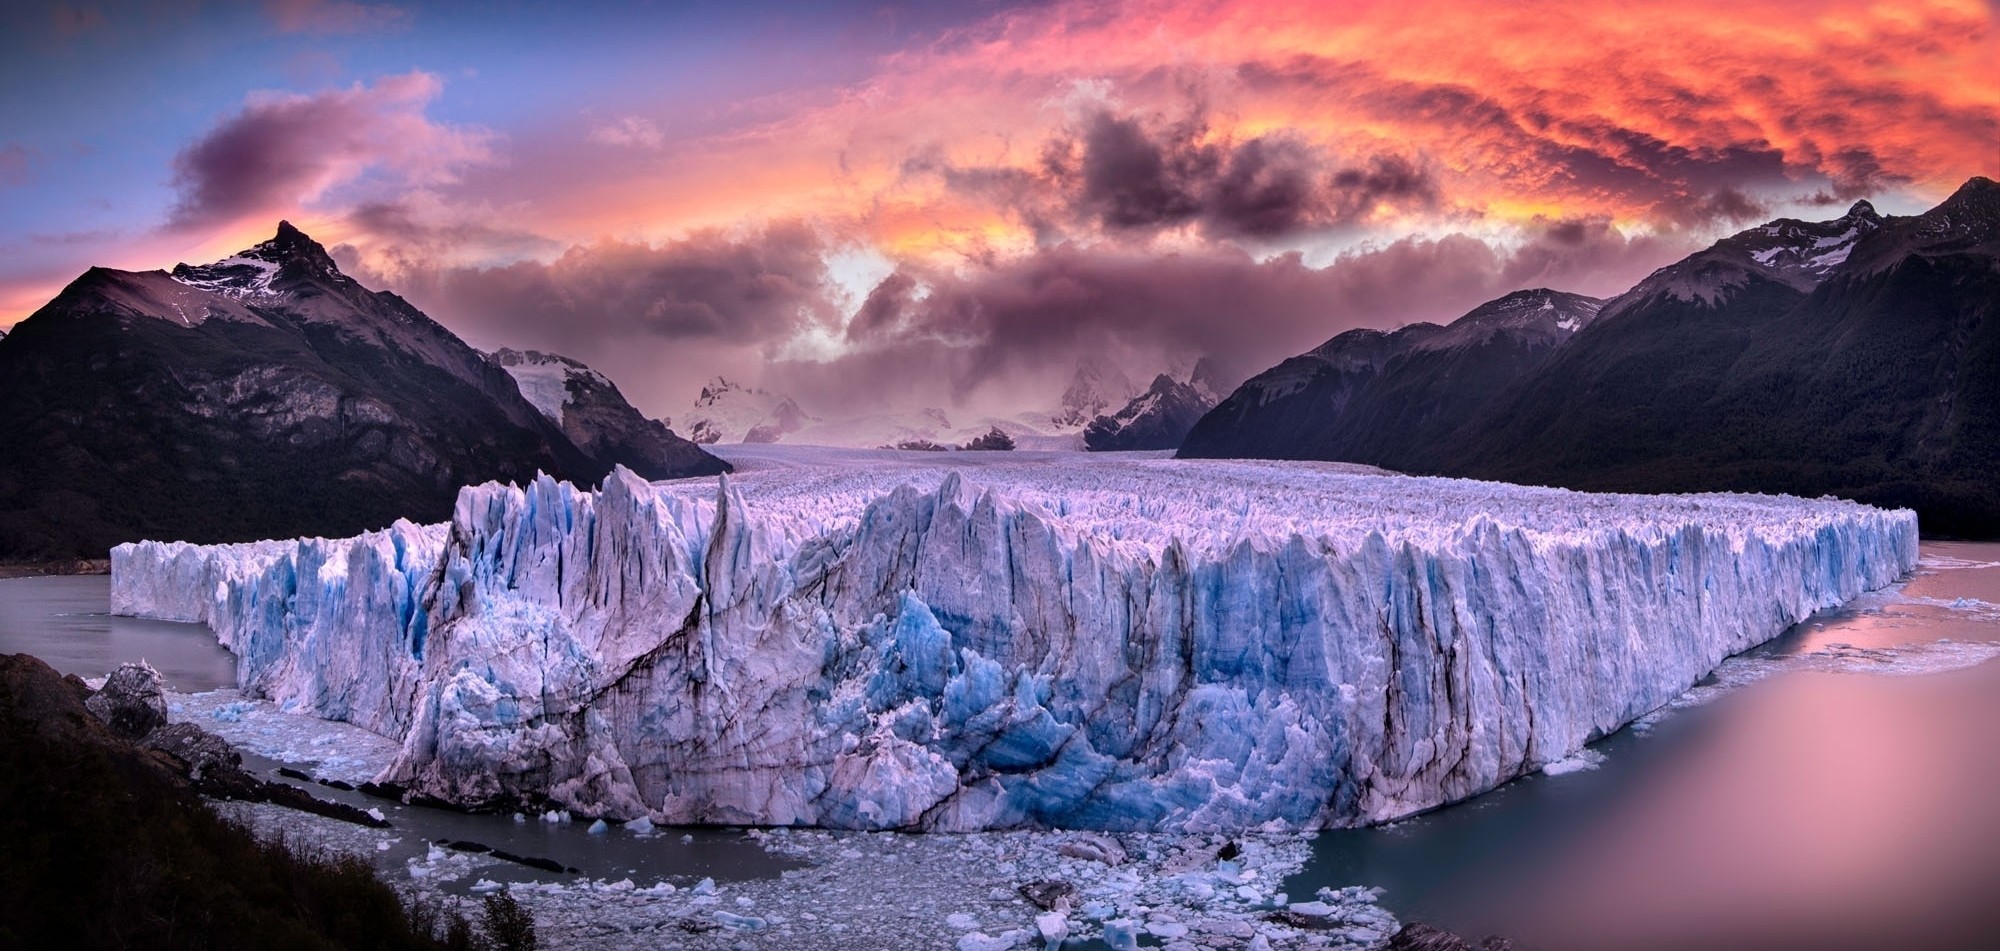 Glaciers Argentina Sunset Sea Mountains Clouds Snowy Peak Nature Landscape 2000x951